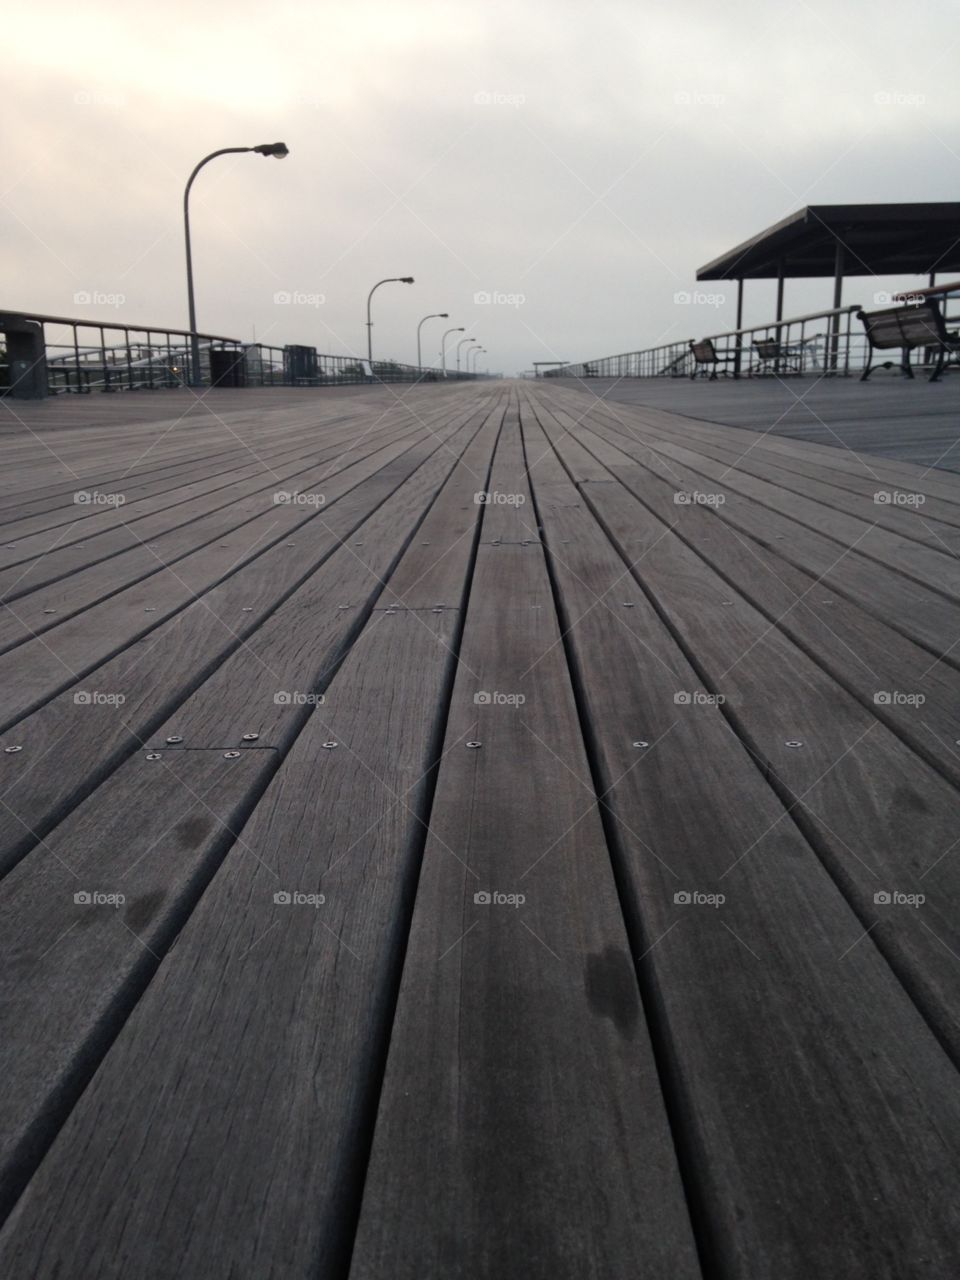 Boardwalk perspective 